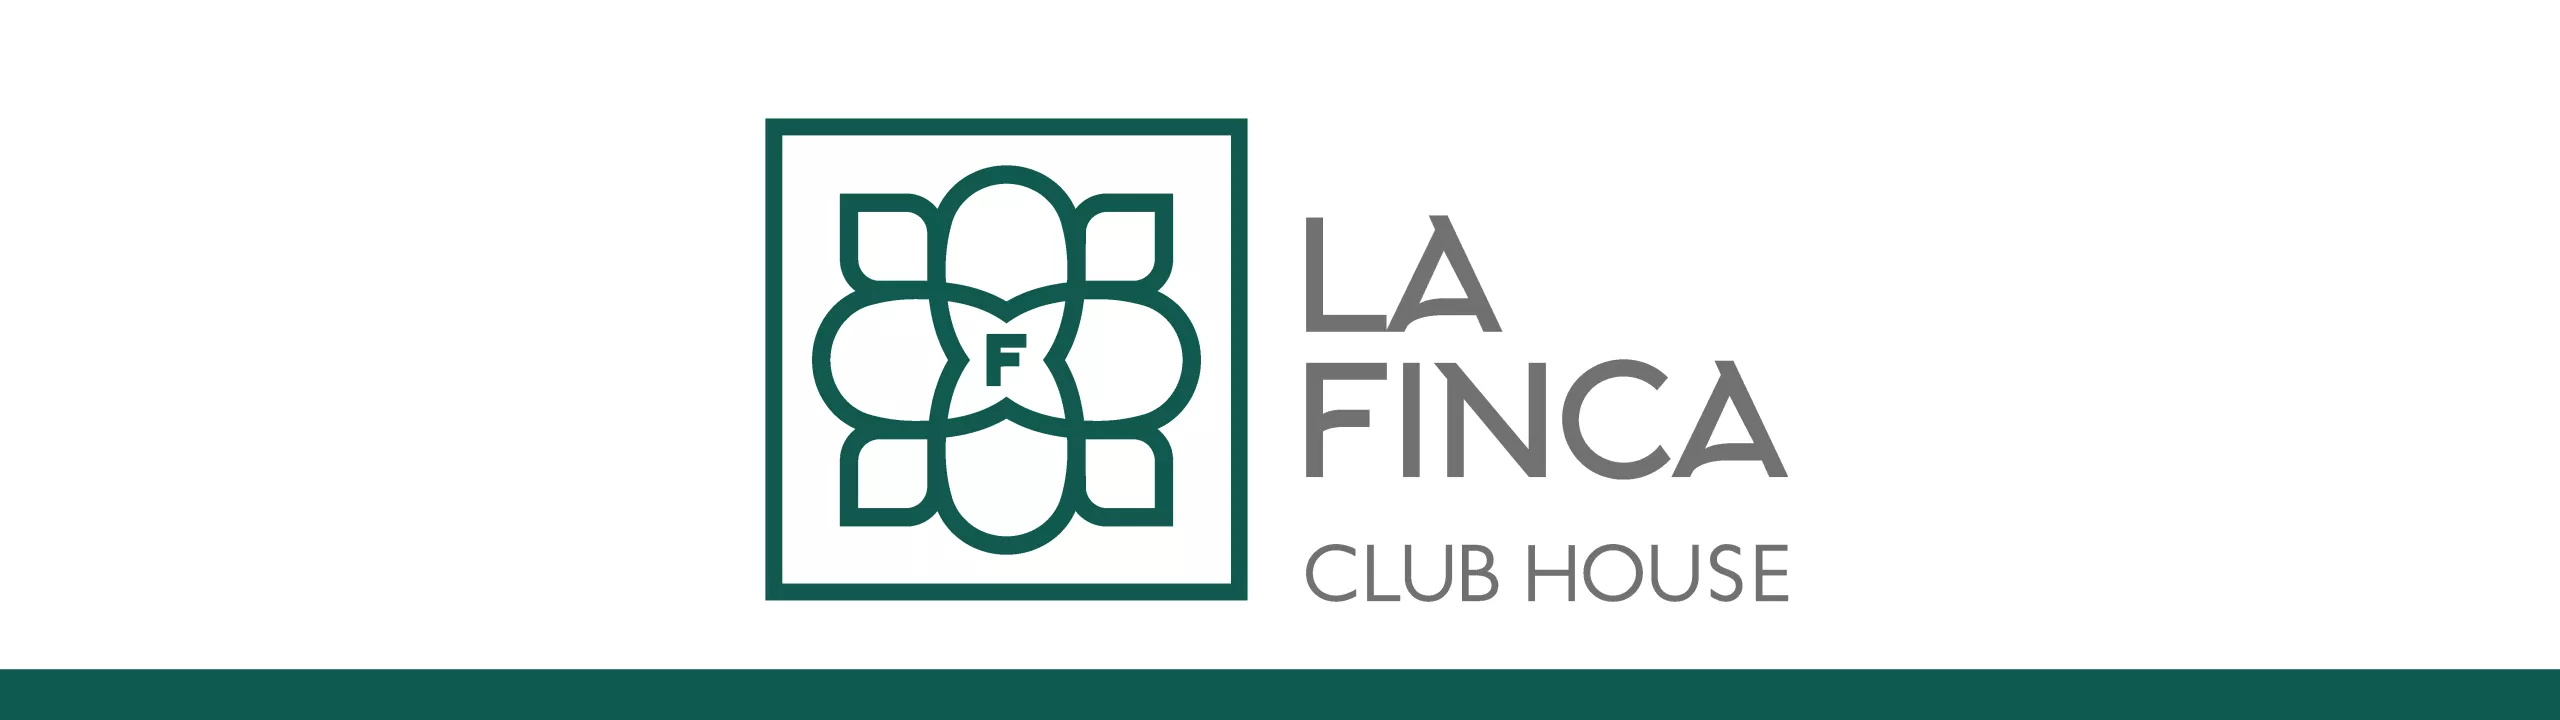 La Finca Club House